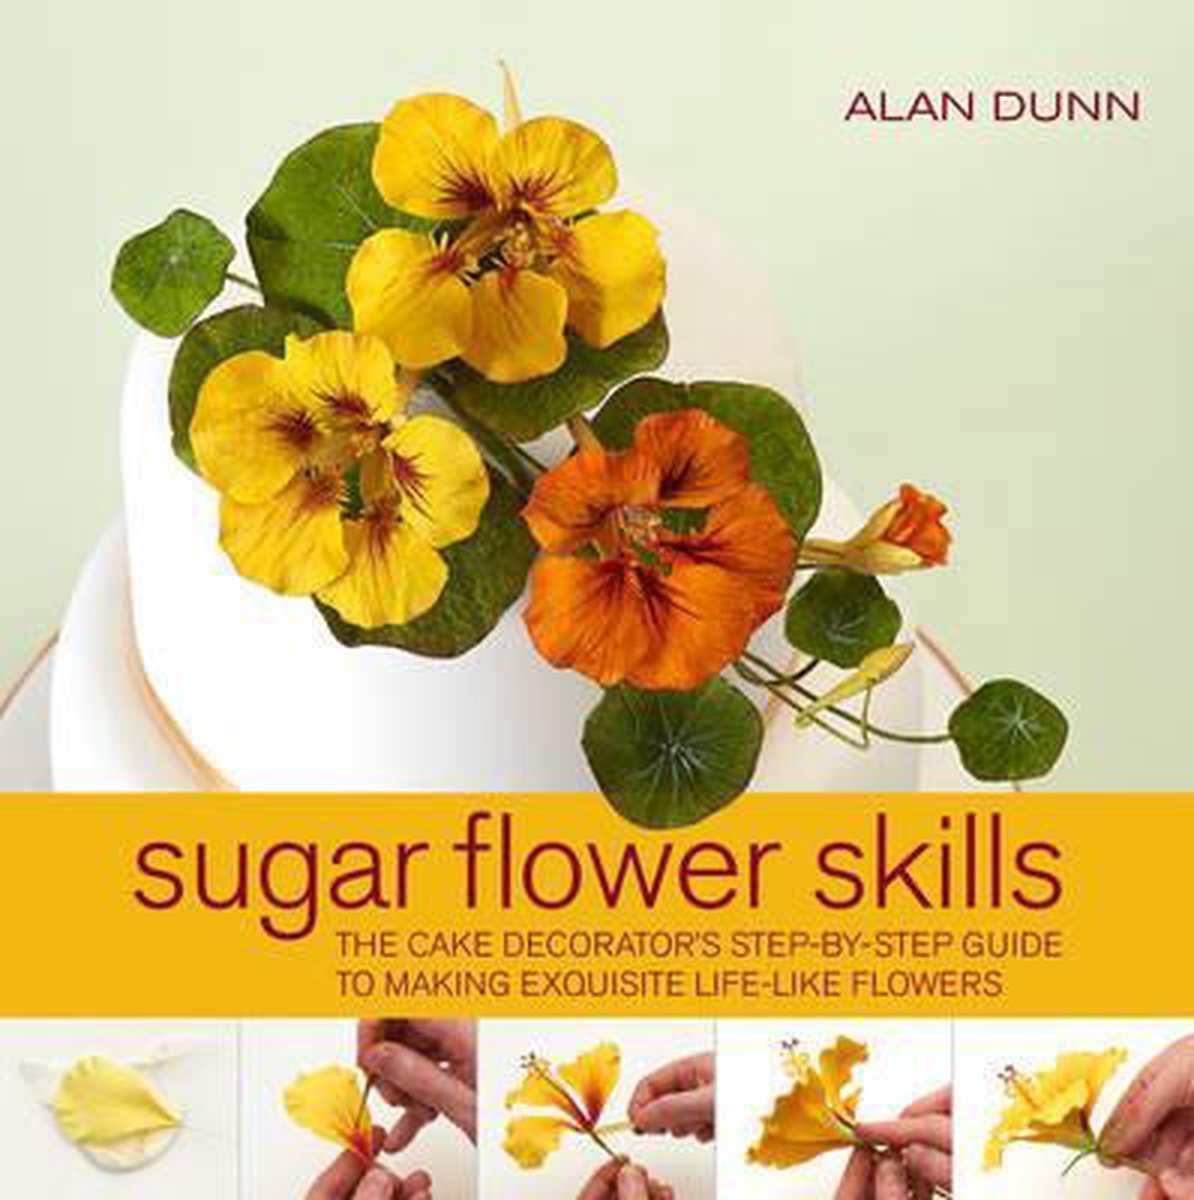 Sugar Flower Skills